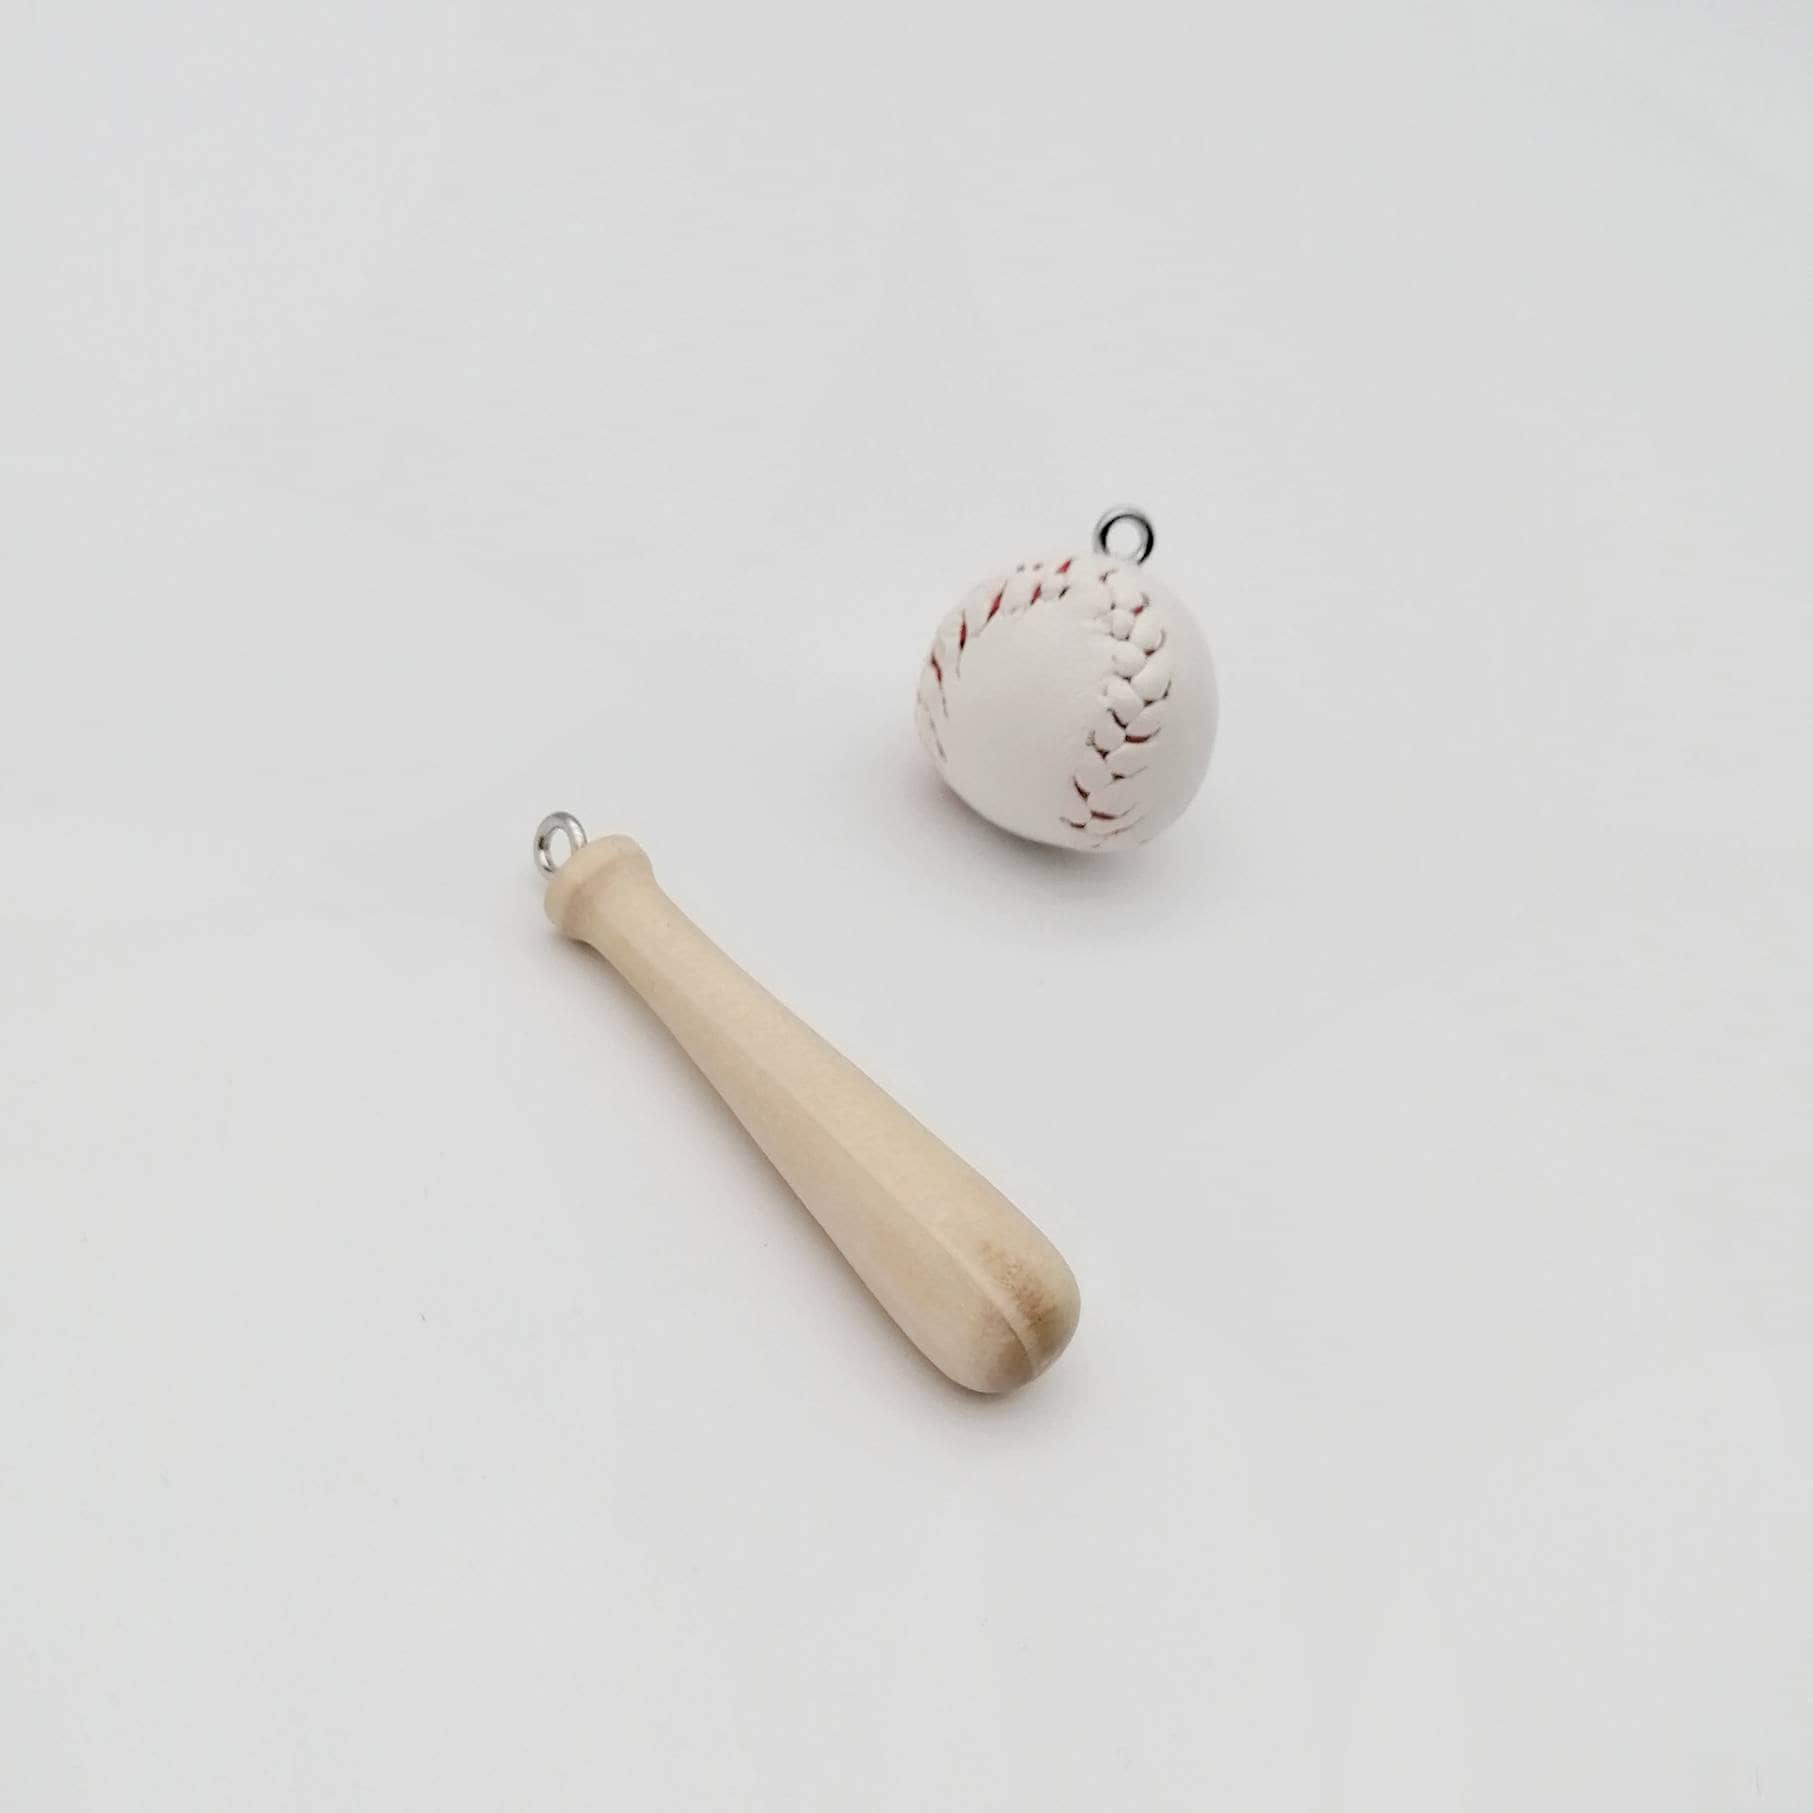 Elegant Baseball Charms for the Creative Baseball Fan 